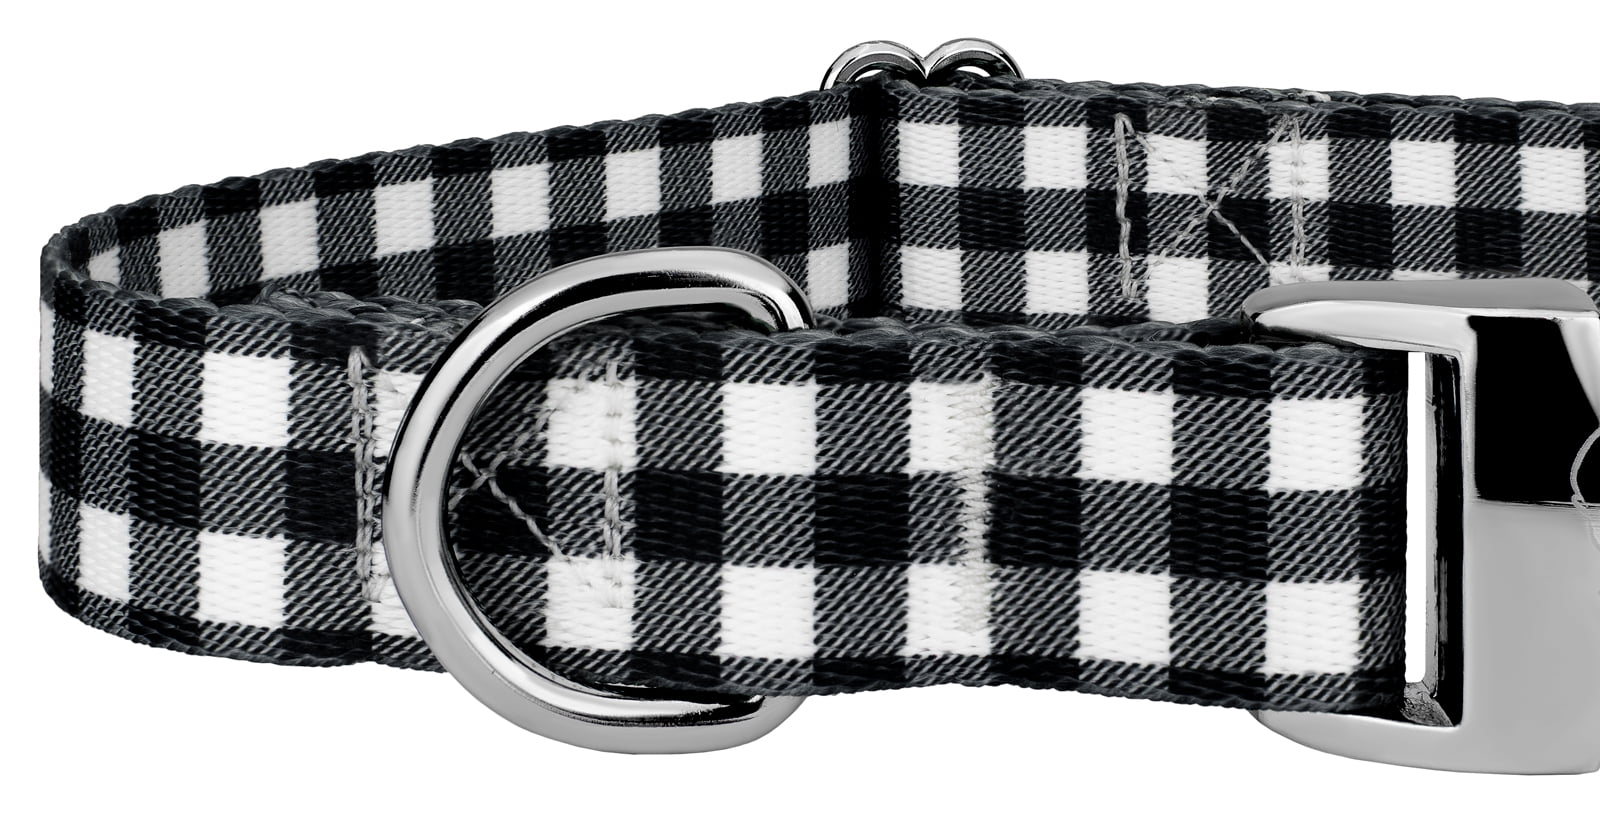 Plaid Dog Collar, Black & Taupe / Large